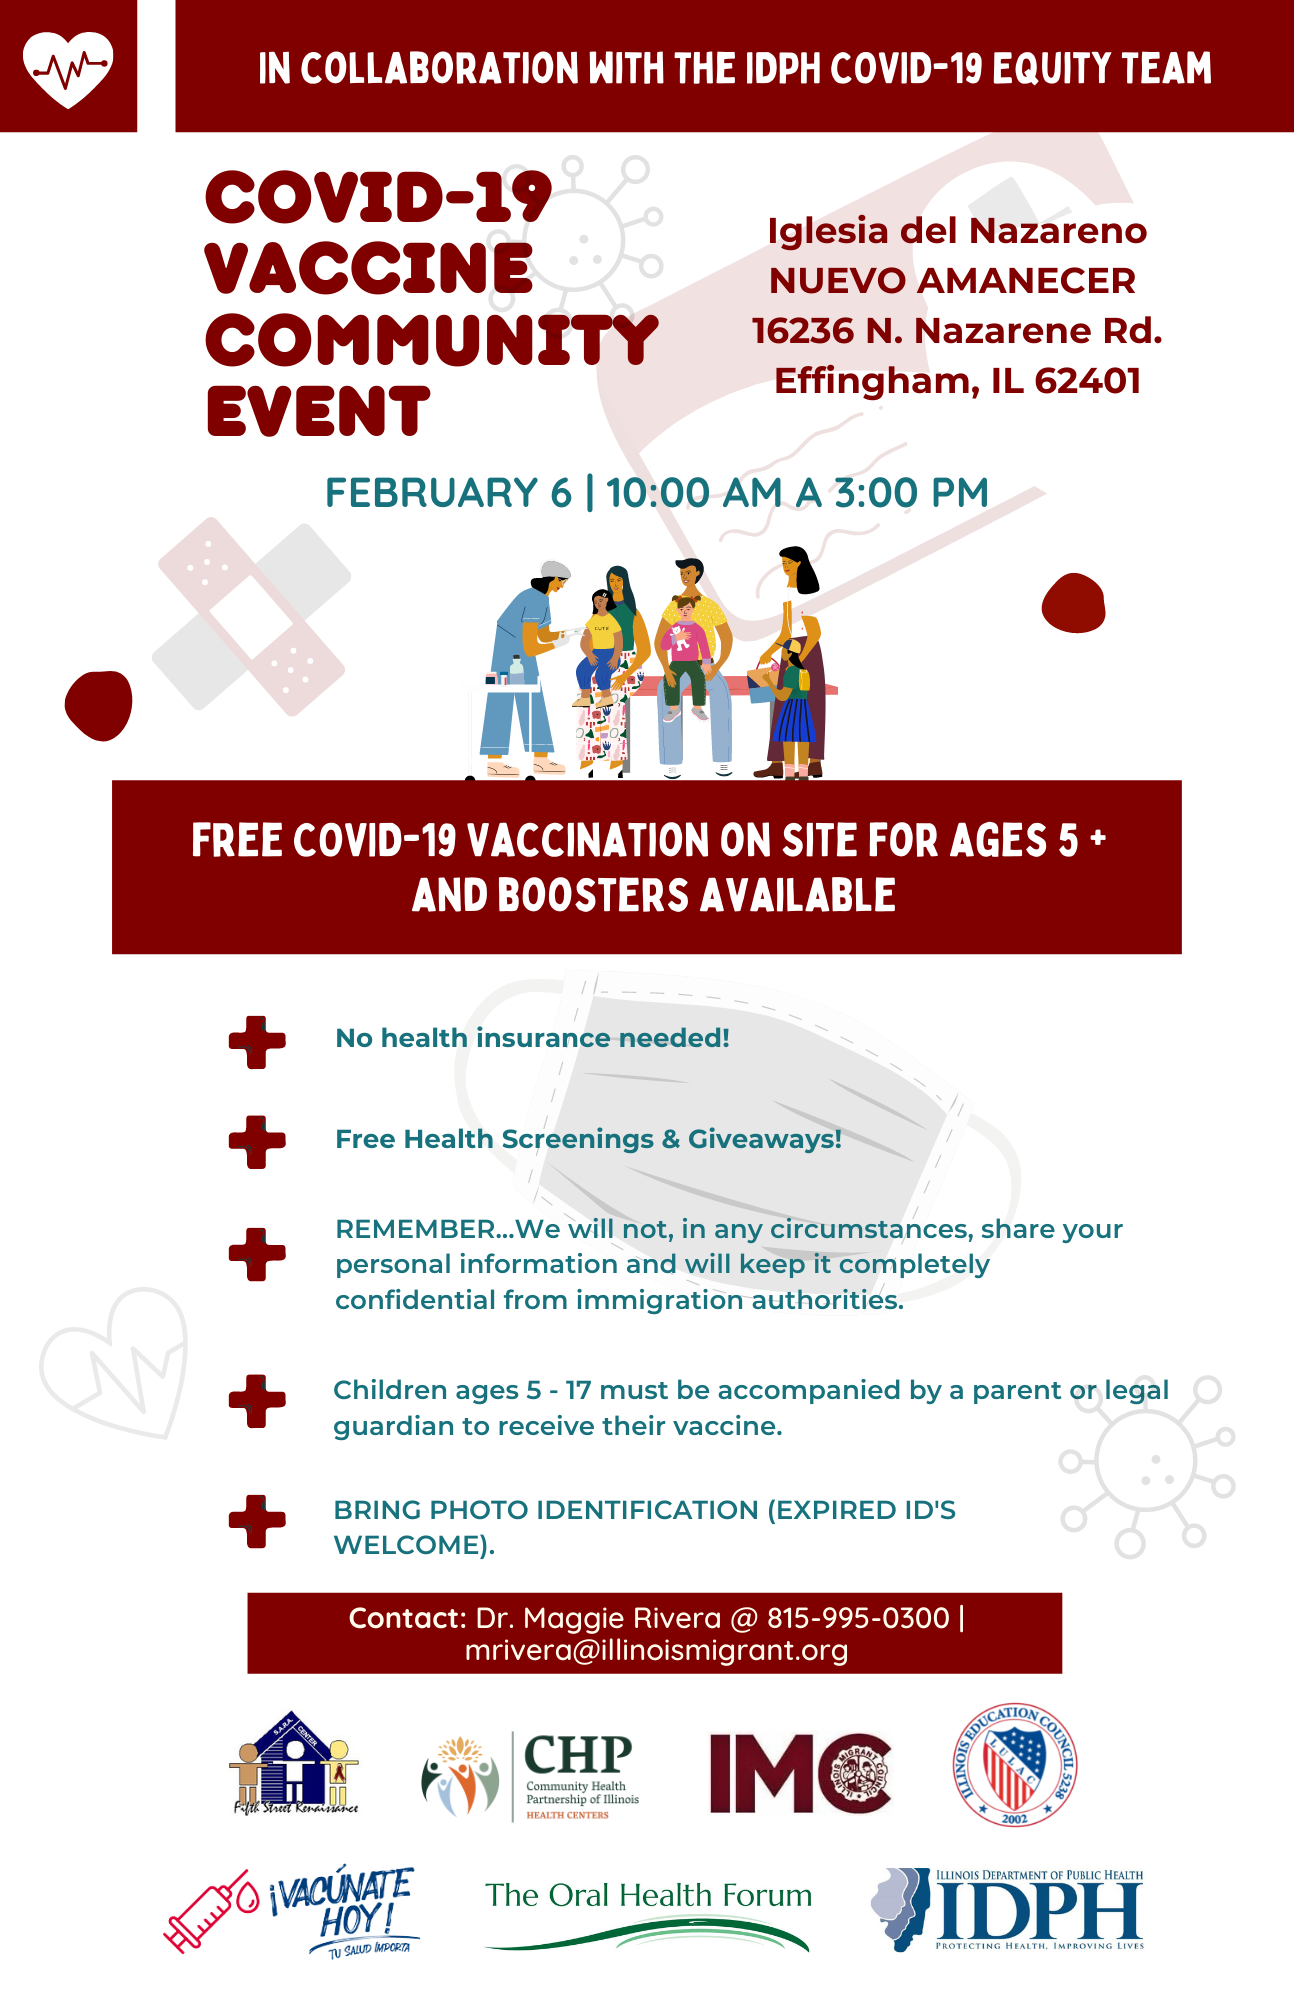 COVID-19 vaccine community event flyer